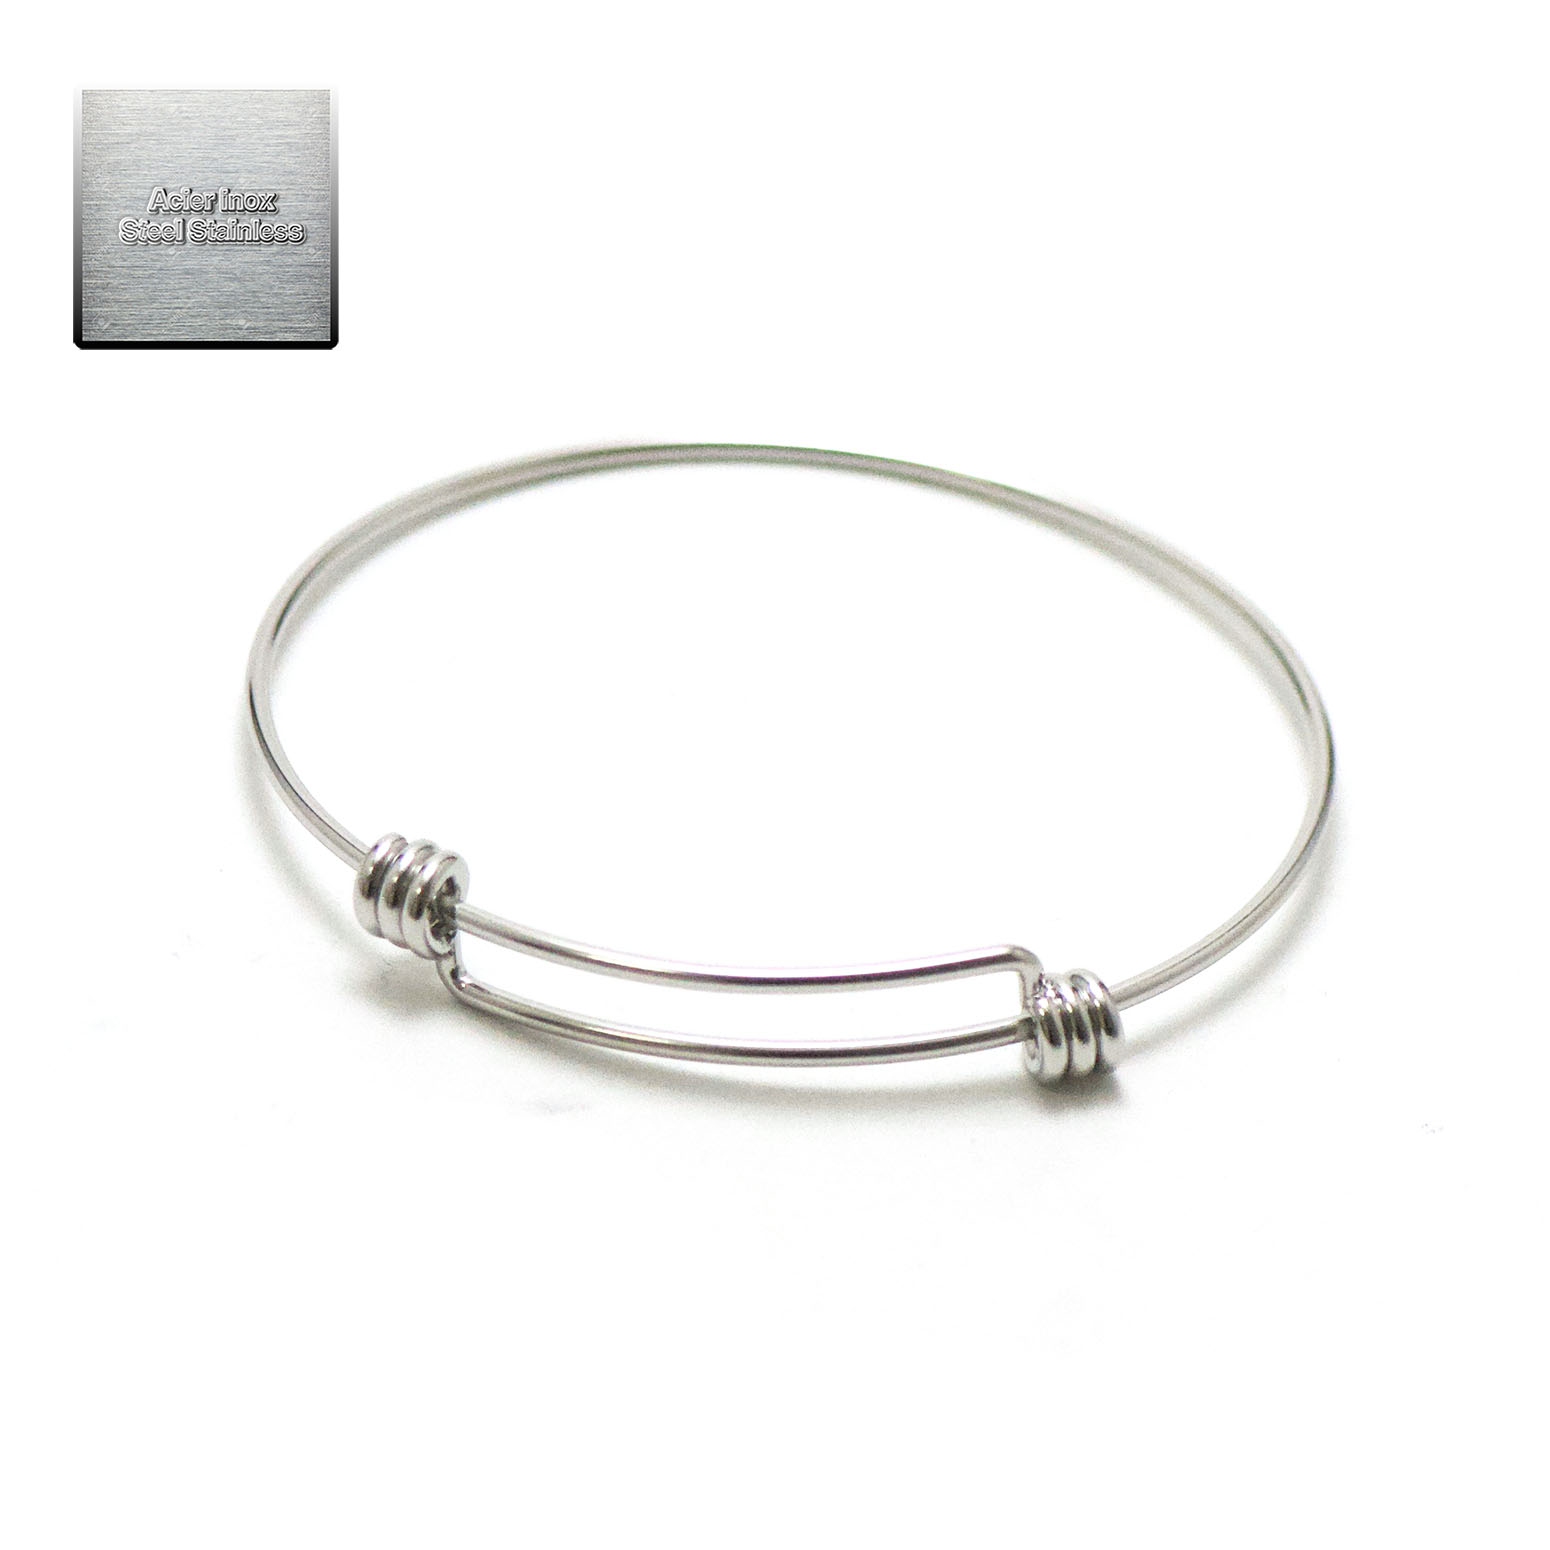 Acier inox: 1 support bracelet jonc fermé, steel stainless